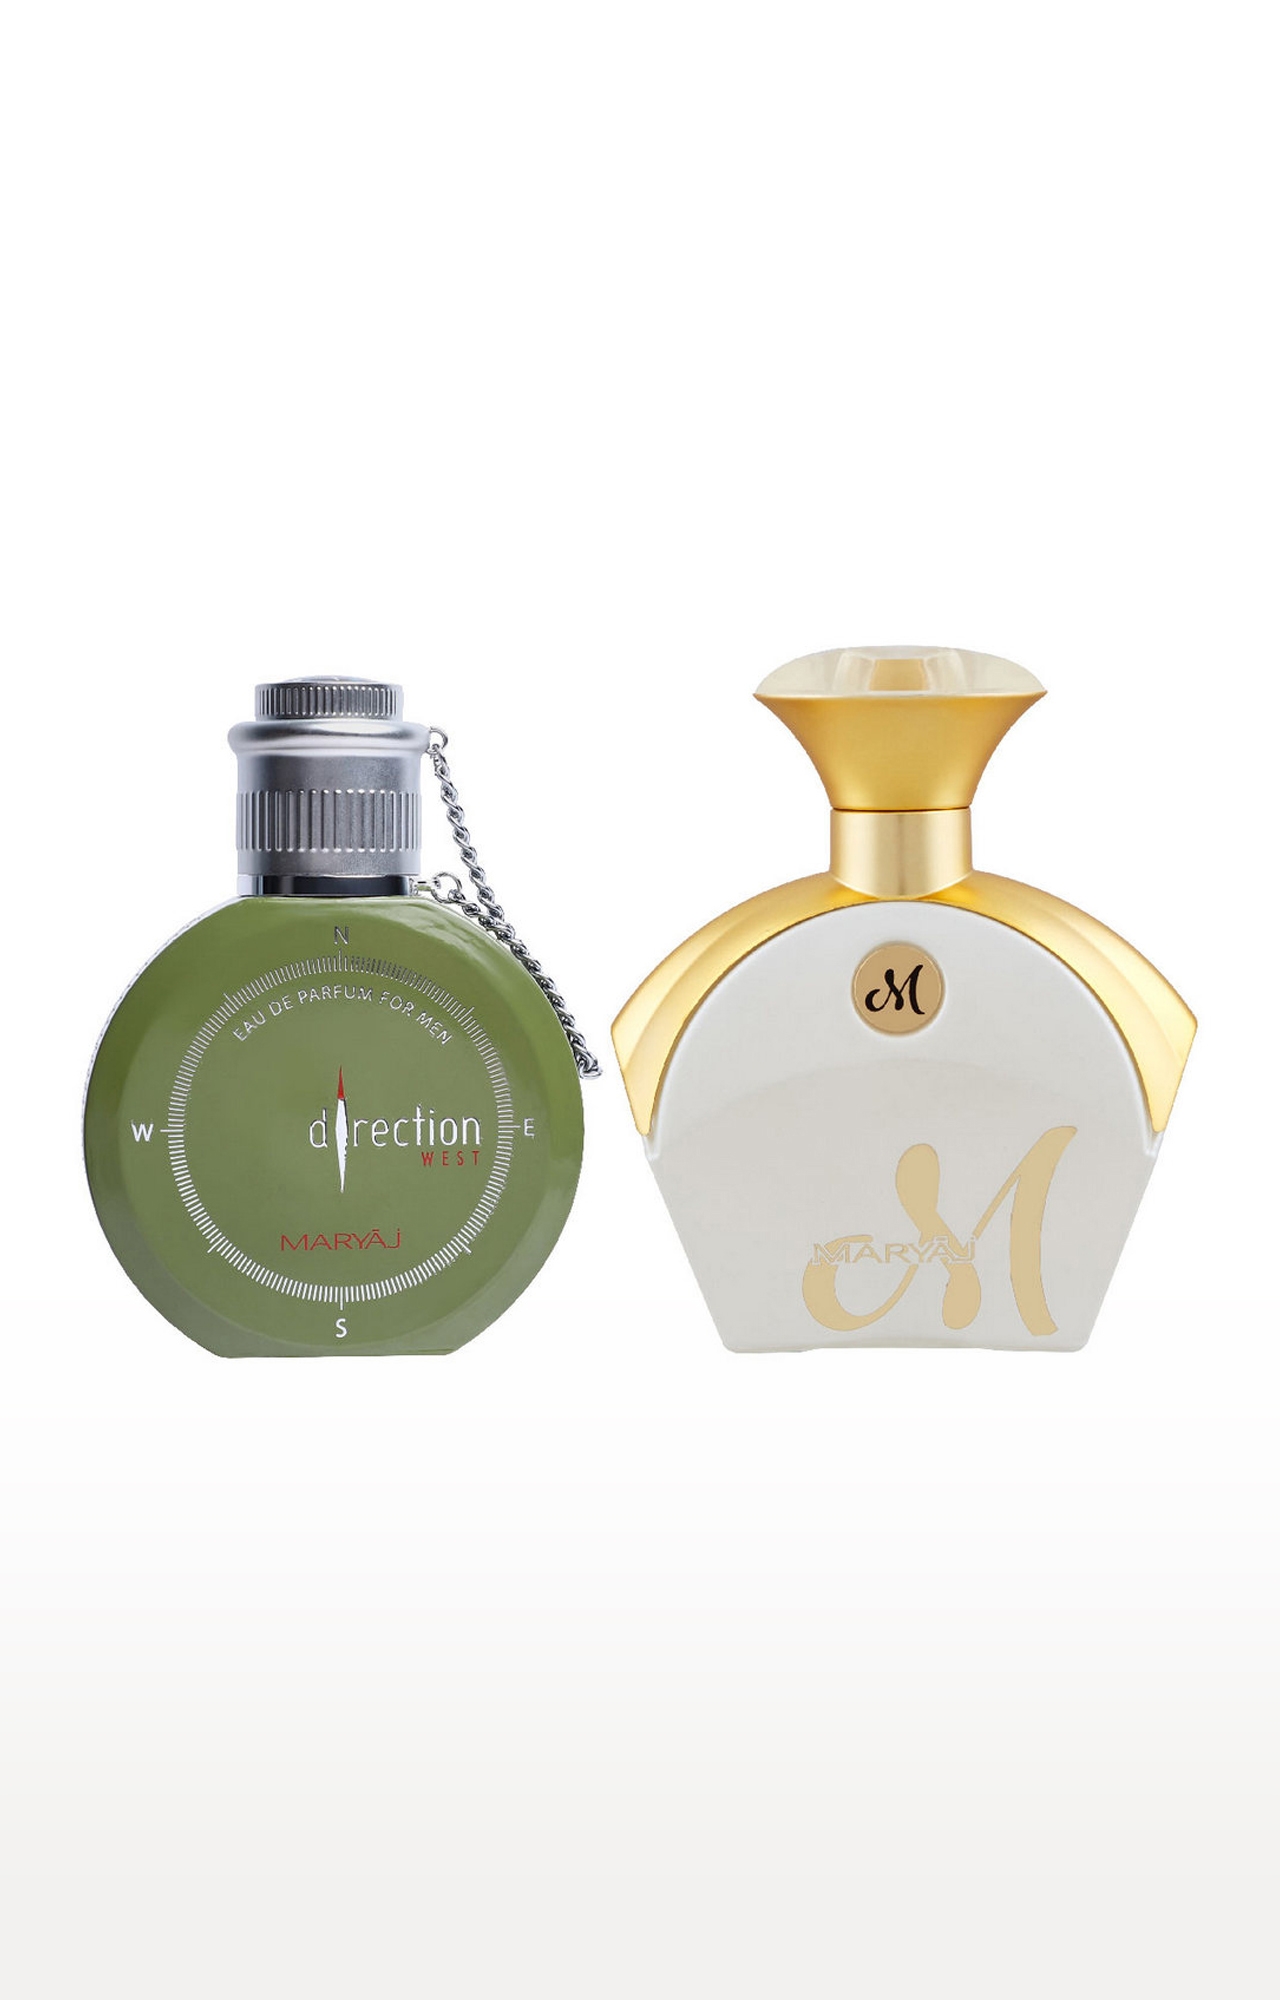 Maryaj | Maryaj Direction West Eau De Parfum Green Perfume 100ml for Men and Maryaj M White for Her Eau De Parfum Fruity Perfume 90ml for Women 0